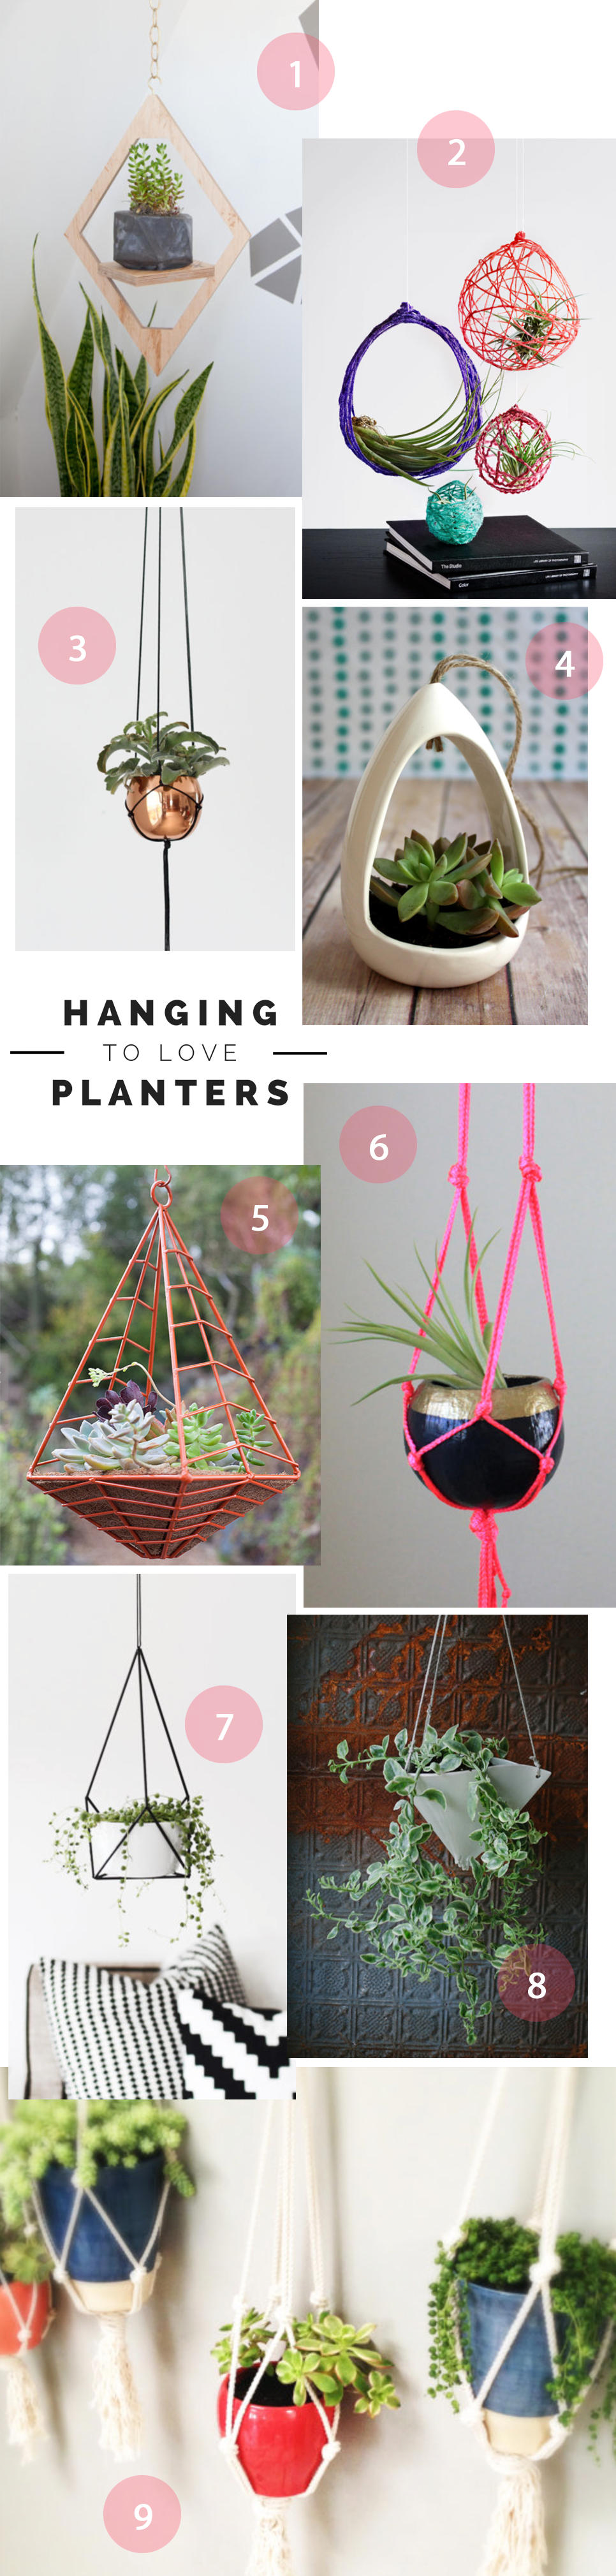 Favorite Hanging Planters Inspiration Board | PepperDesignBlog.com